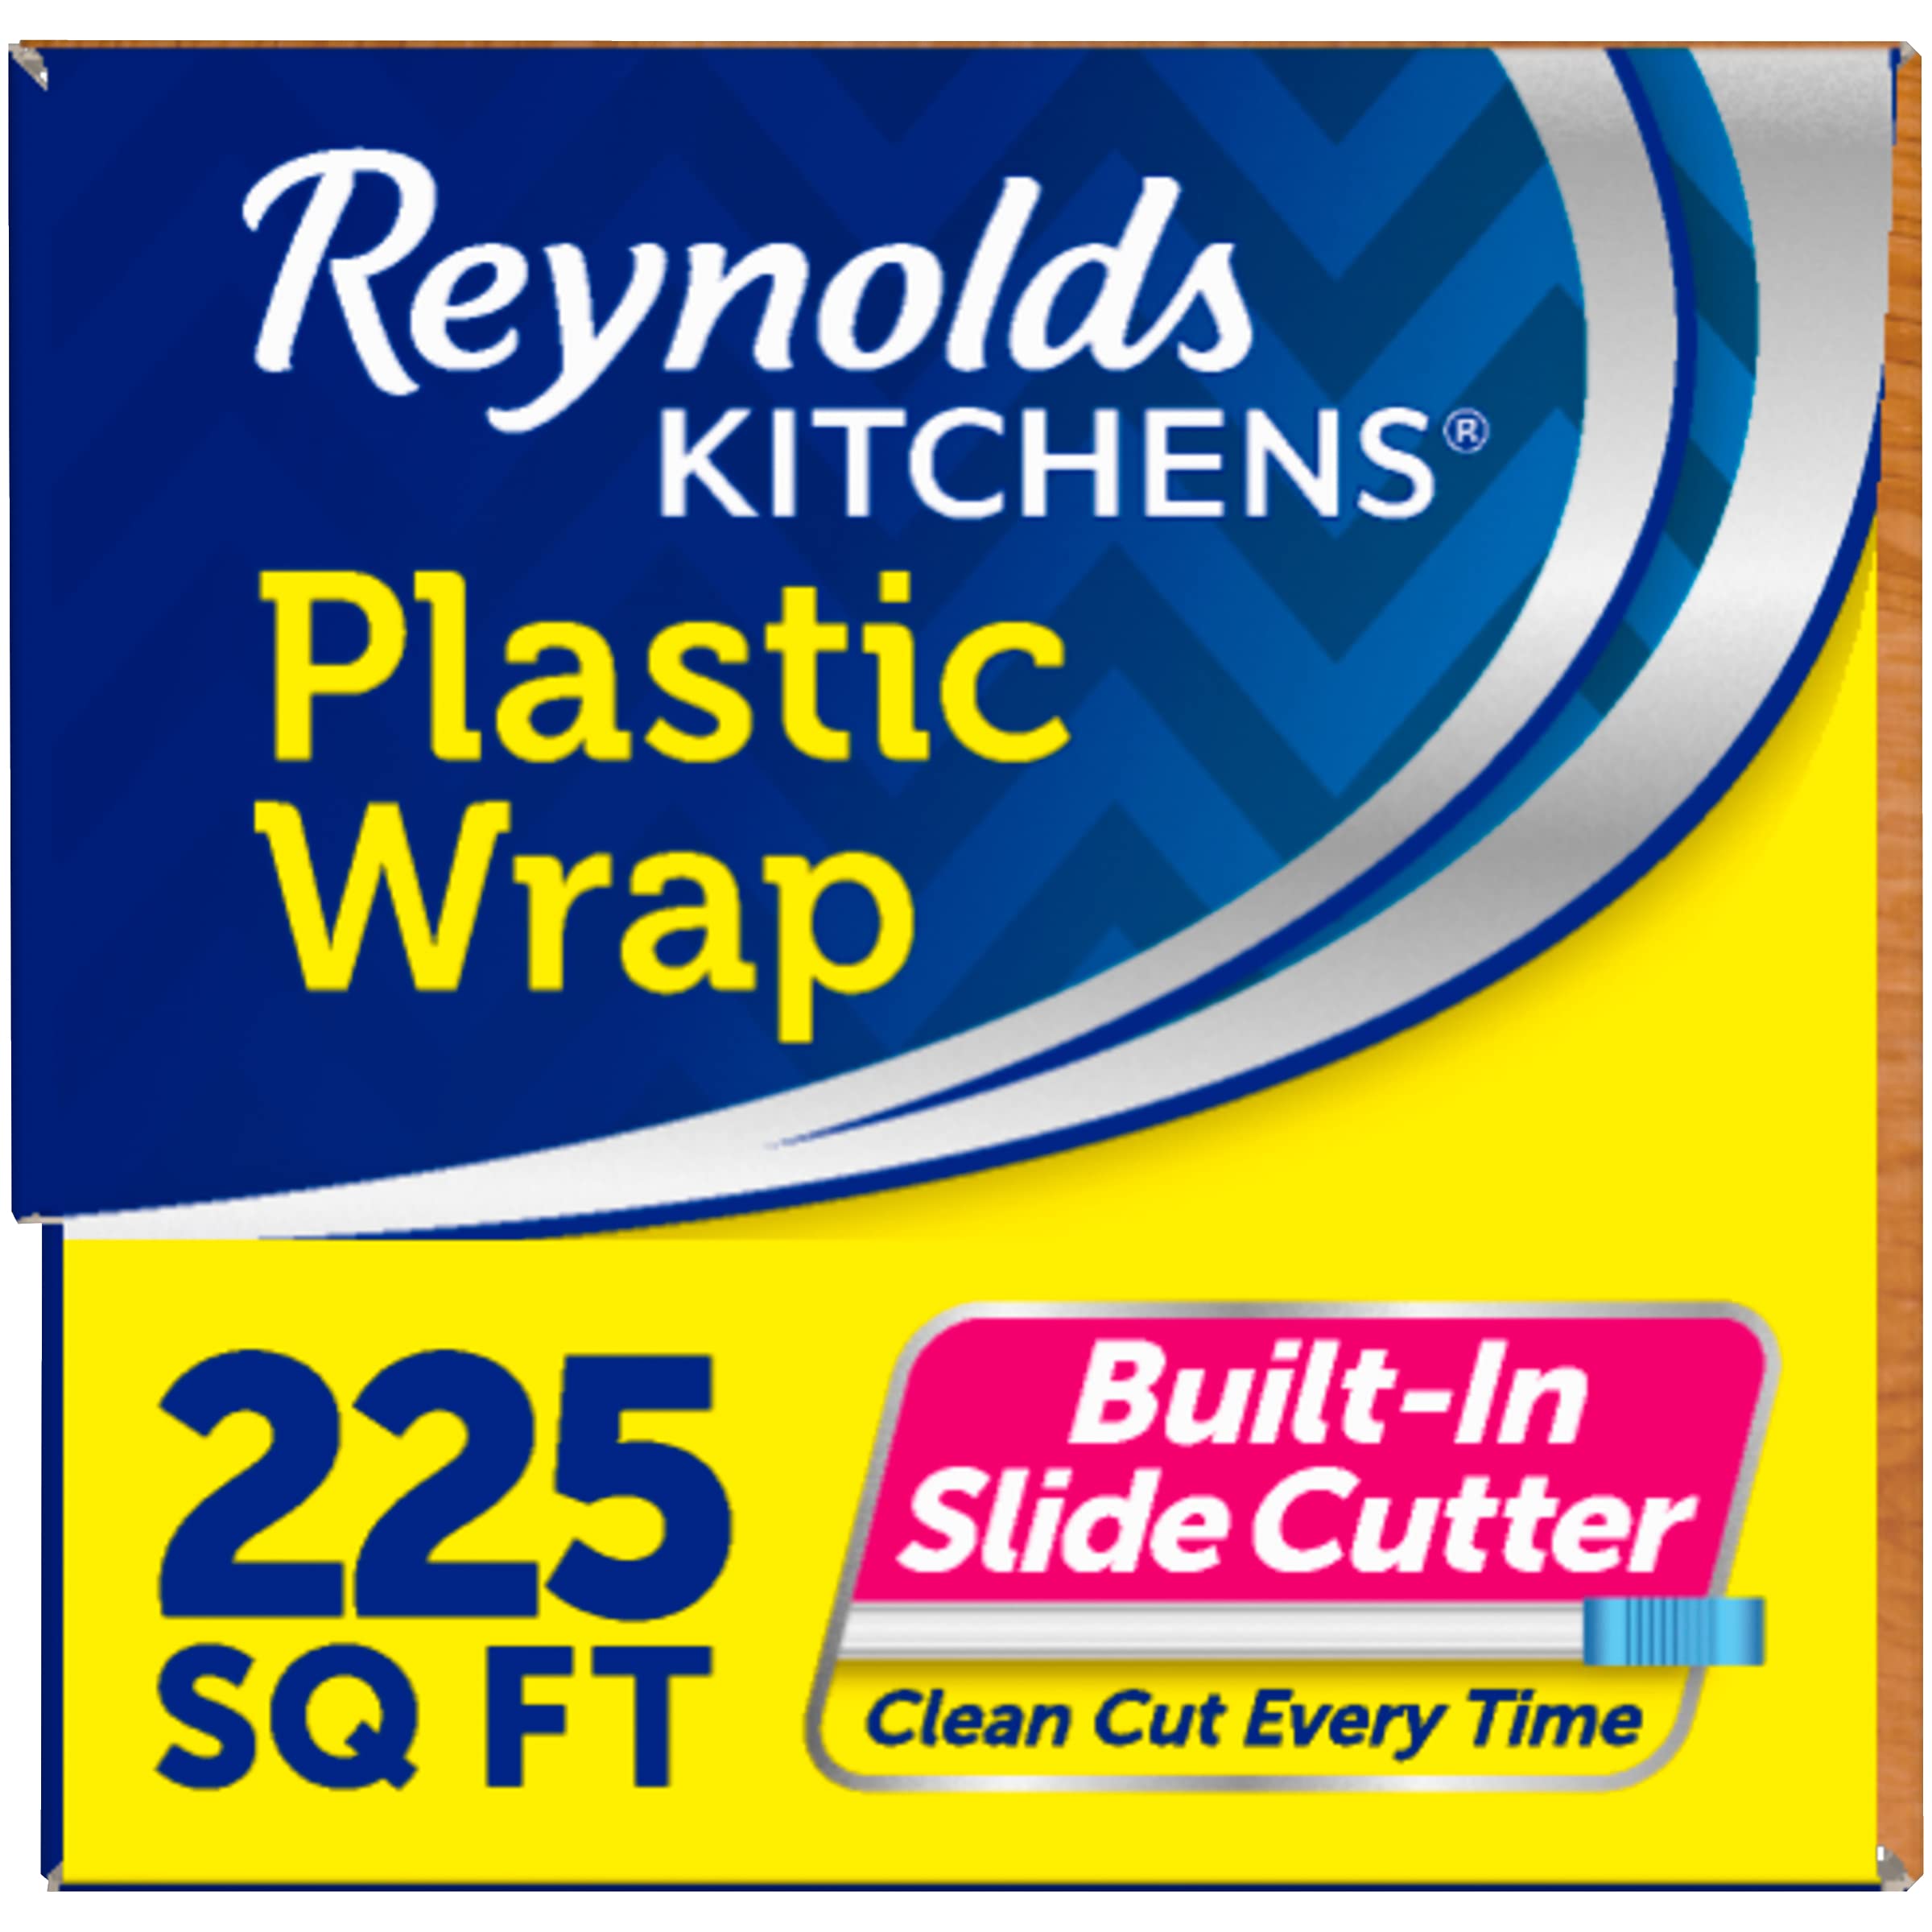 Reynolds Kitchens Quick Cut Plastic Wrap, 225 Square Feet